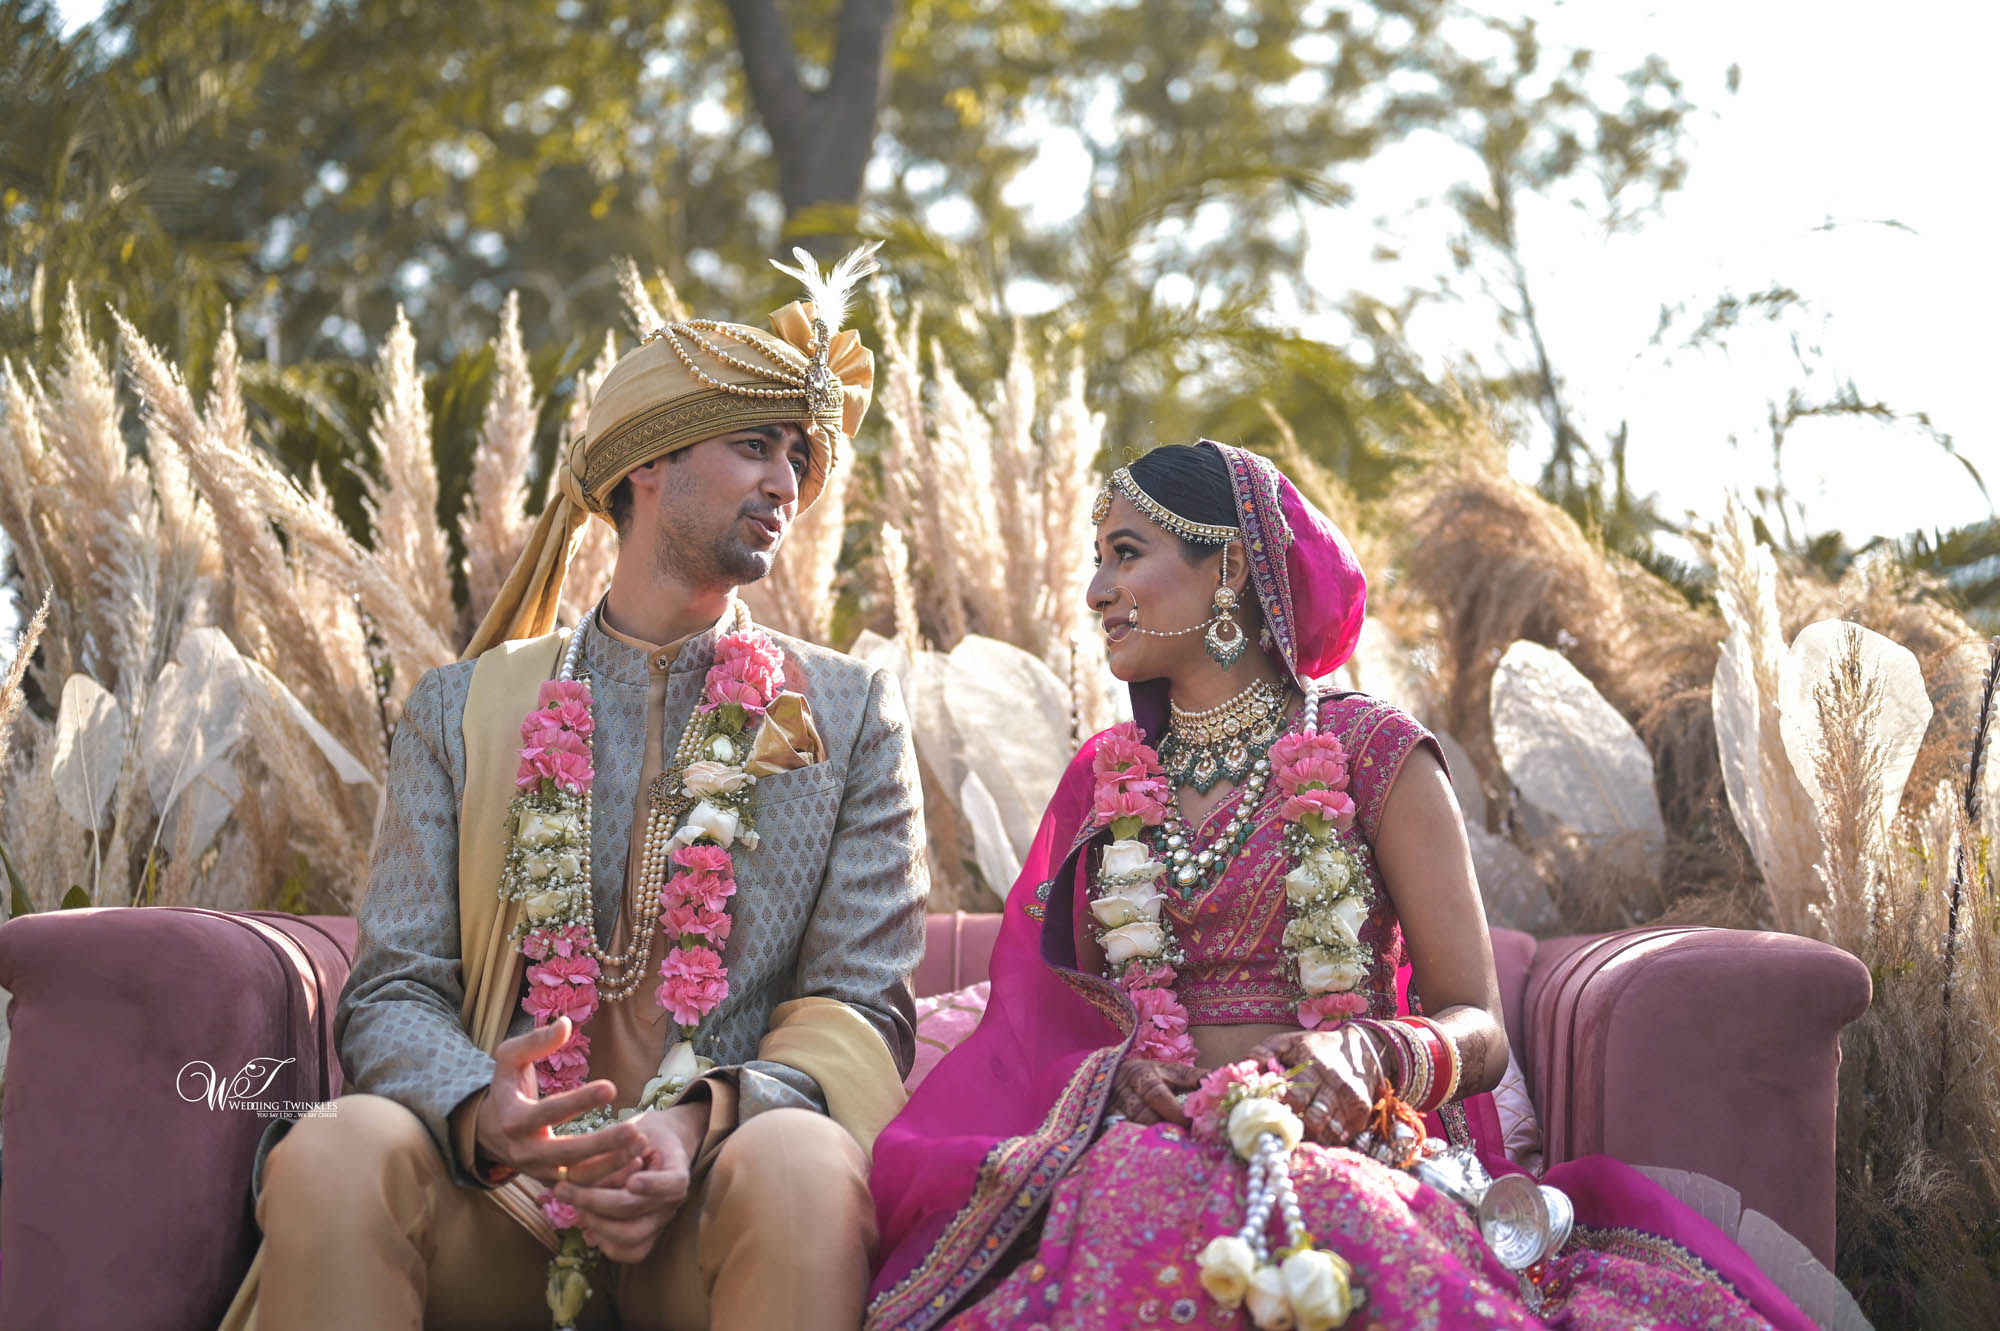 wedding photographers in delhi